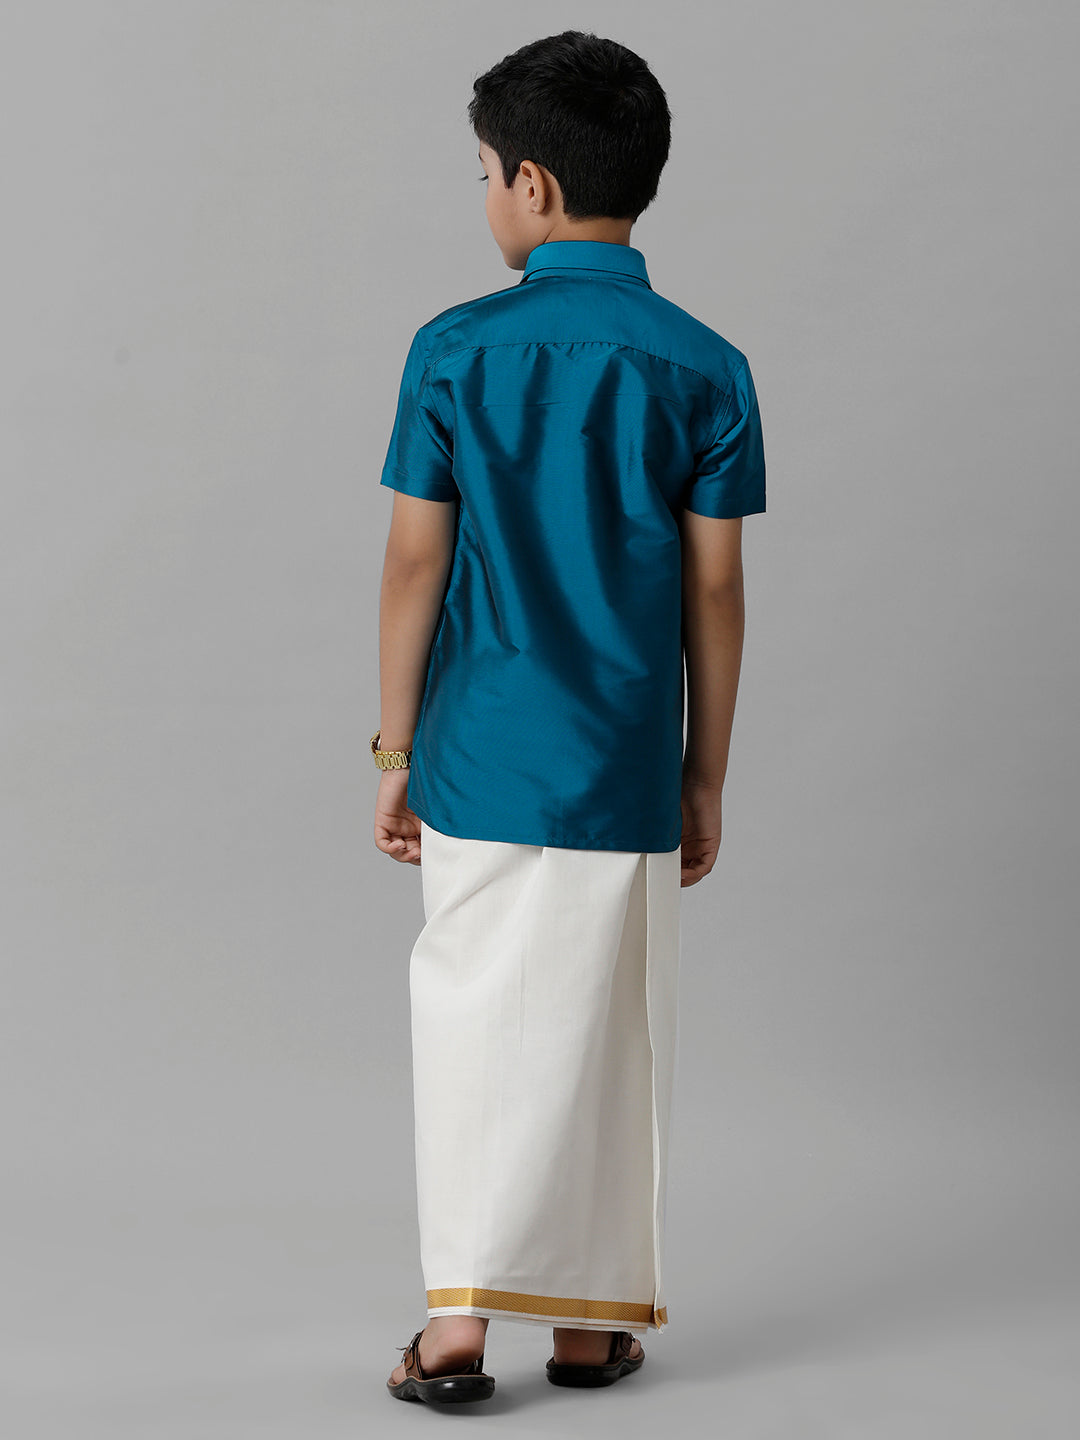 Boys Silk Cotton Light Blue Half Sleeves Shirt with Adjustable Cream Dhoti Combo K1-Back view